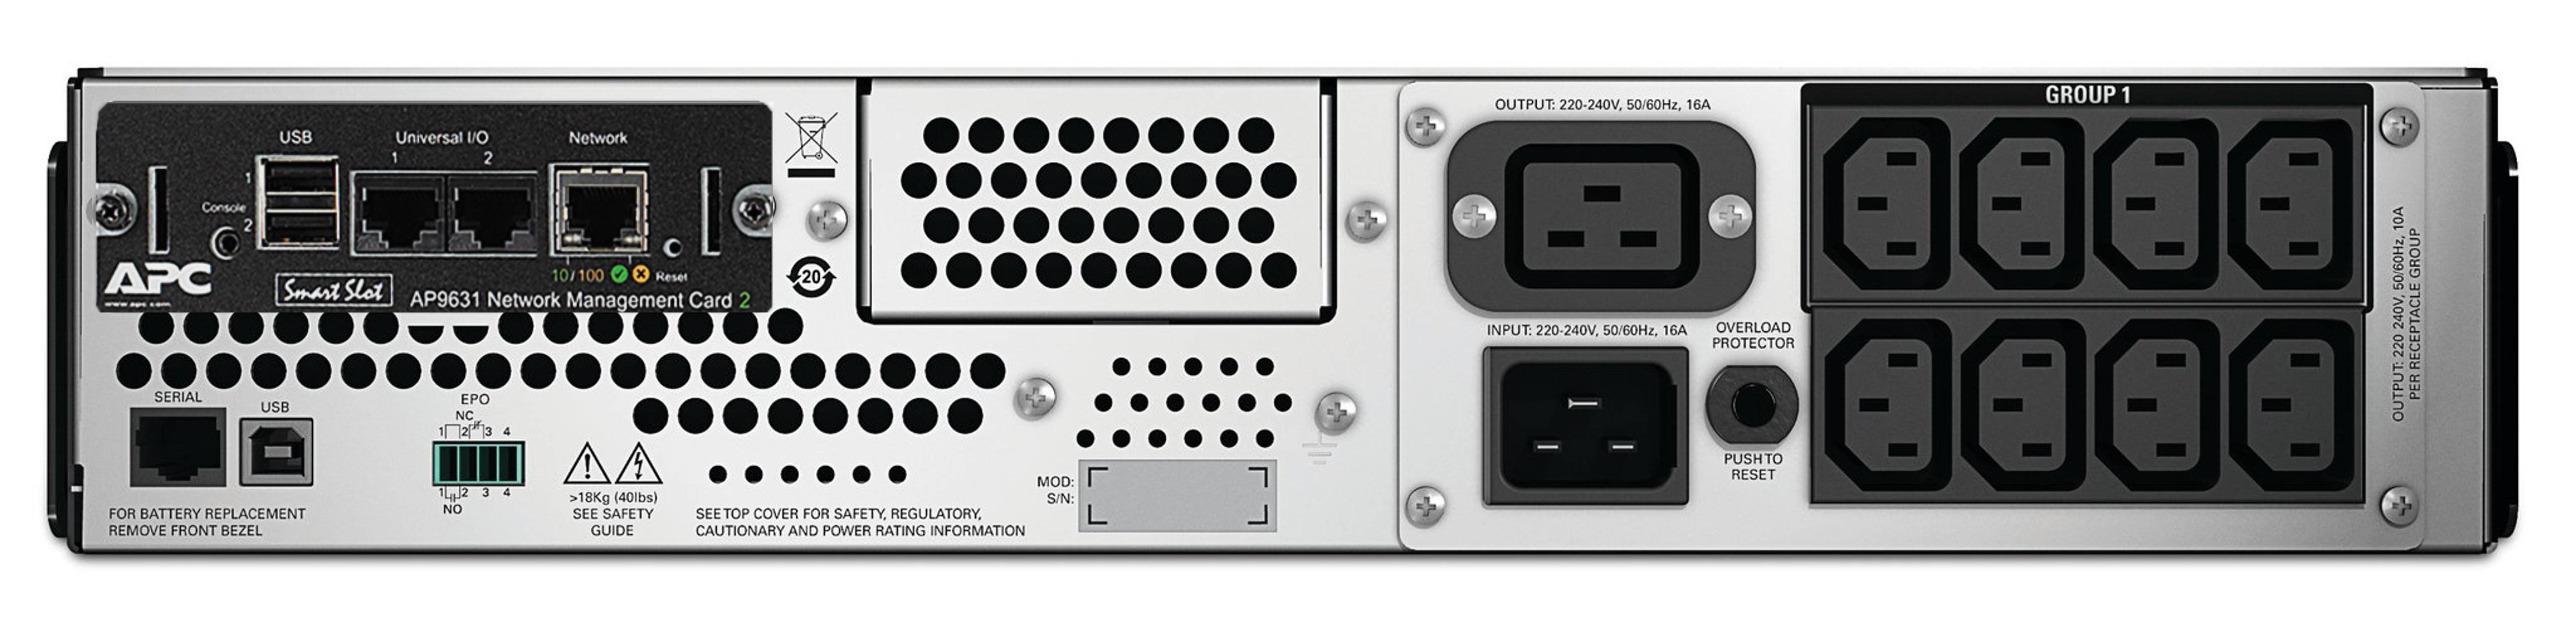 Rca Informatique - image du produit : APC SMART-UPS 3000 VA DA RACK. INCLUDED